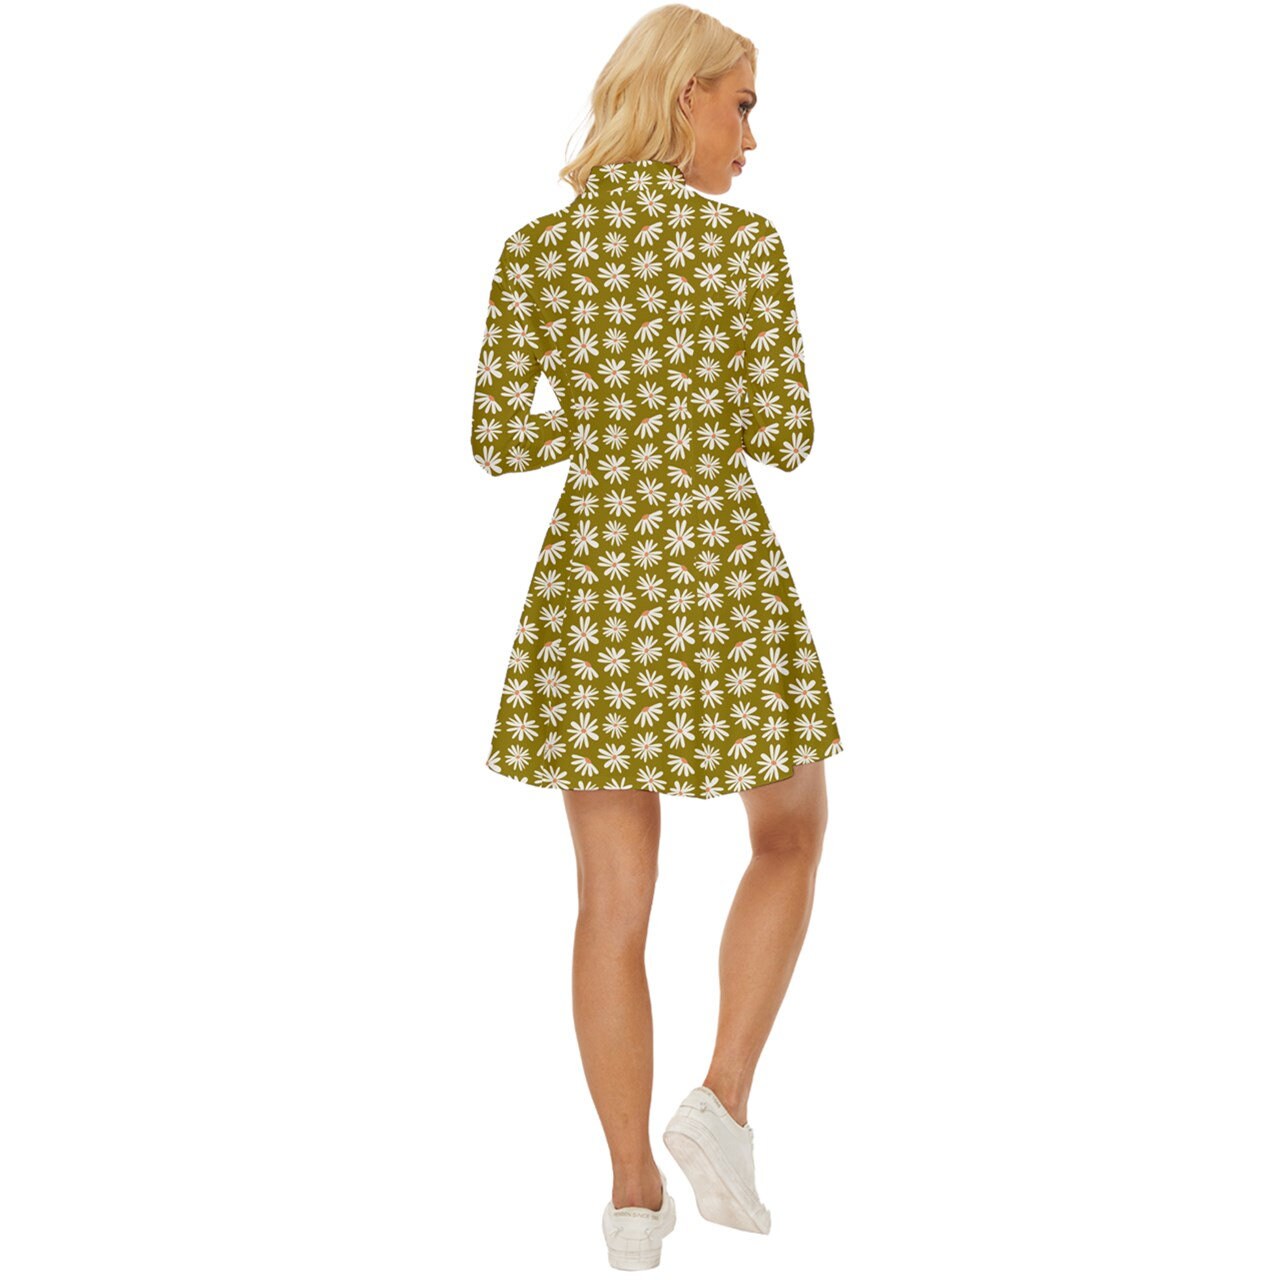 Style vestimentaire des années 60, robe Mod, robe Mod verte, robe col tortue, robe GOGO, robe de style années 60, mini robe des années 60, robe vert olive, robe rétro